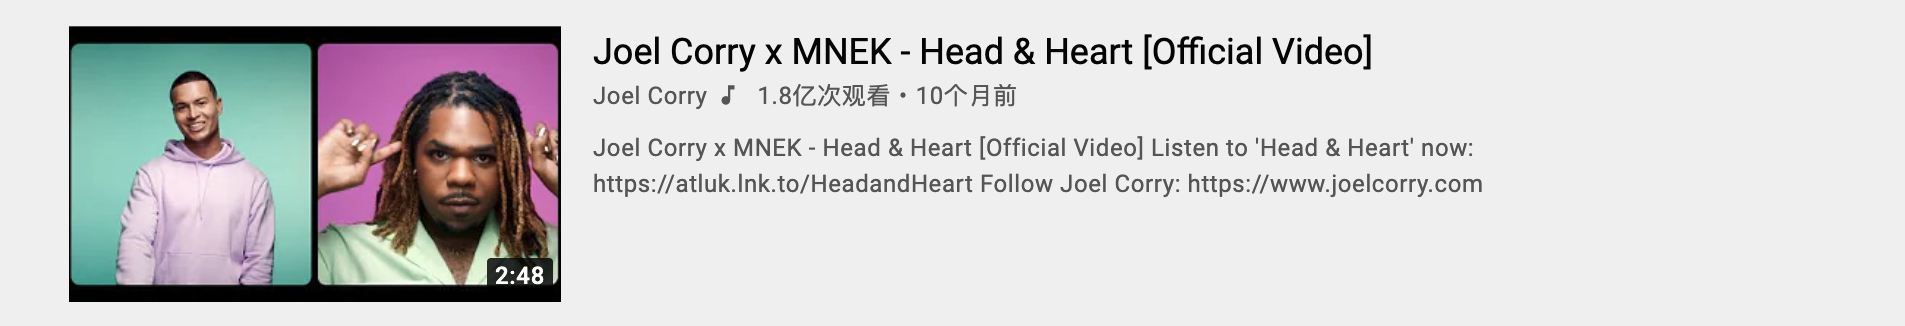 《Head&Heart》在YouTube的播放量高达1.8亿次